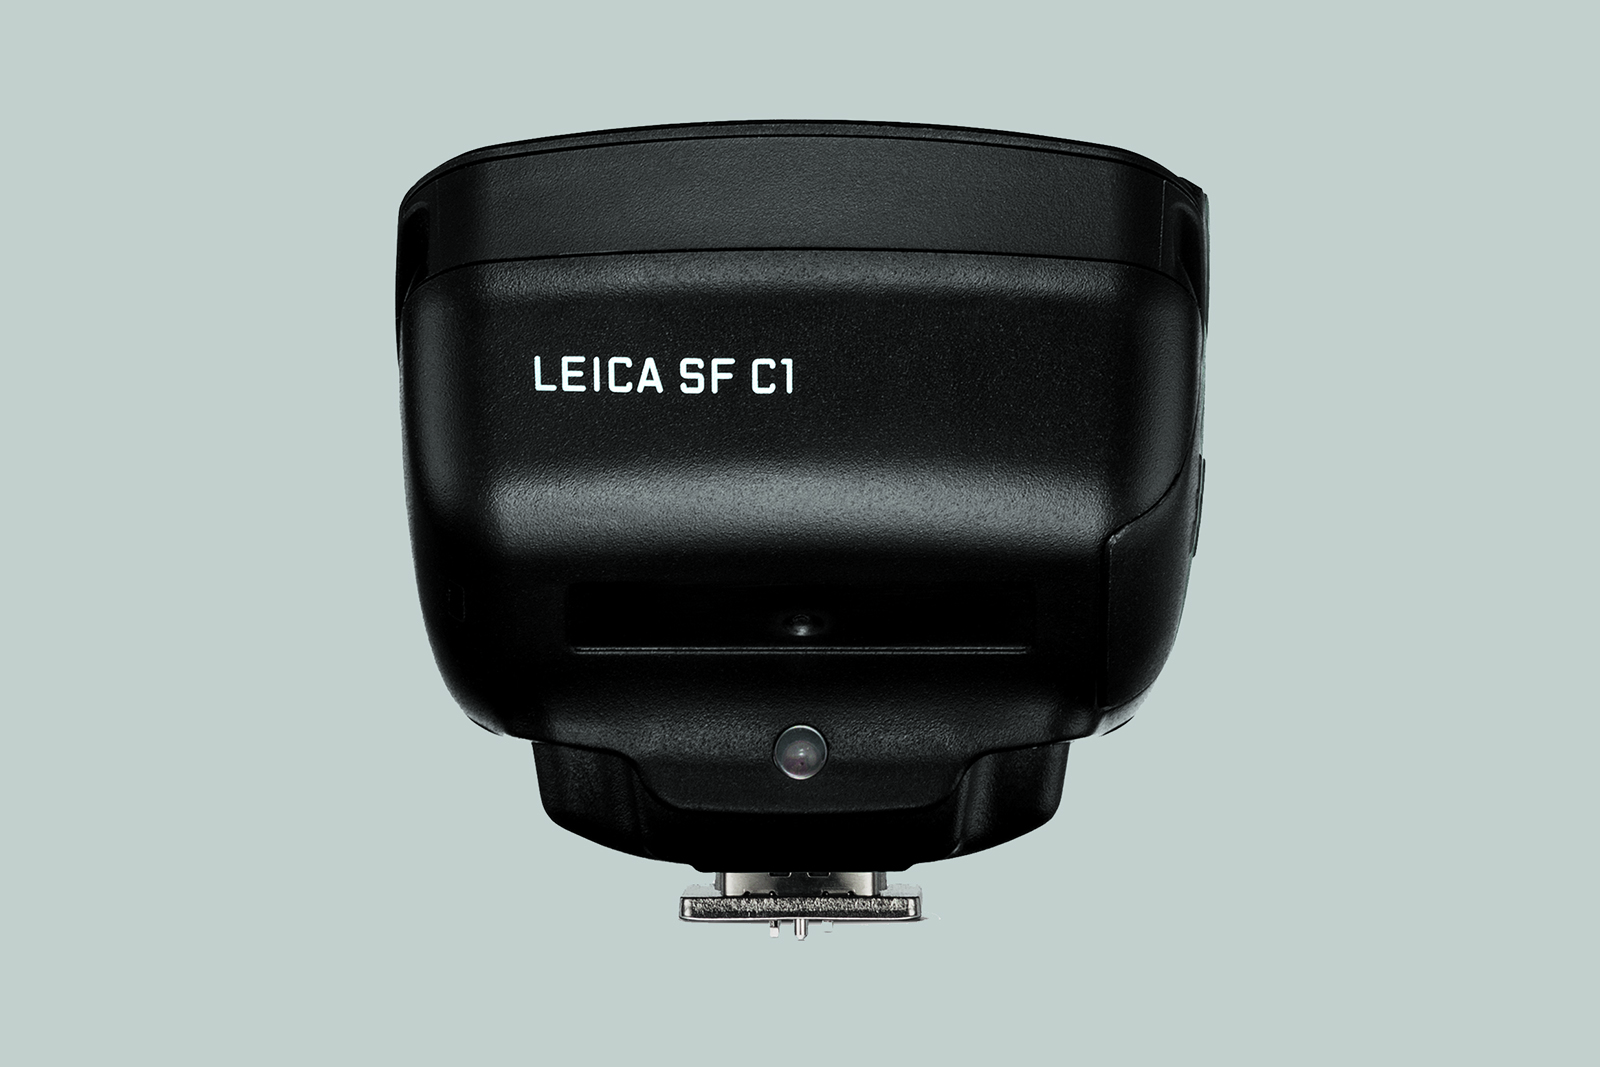 leica sf 60 c1 announced 14626 solo front